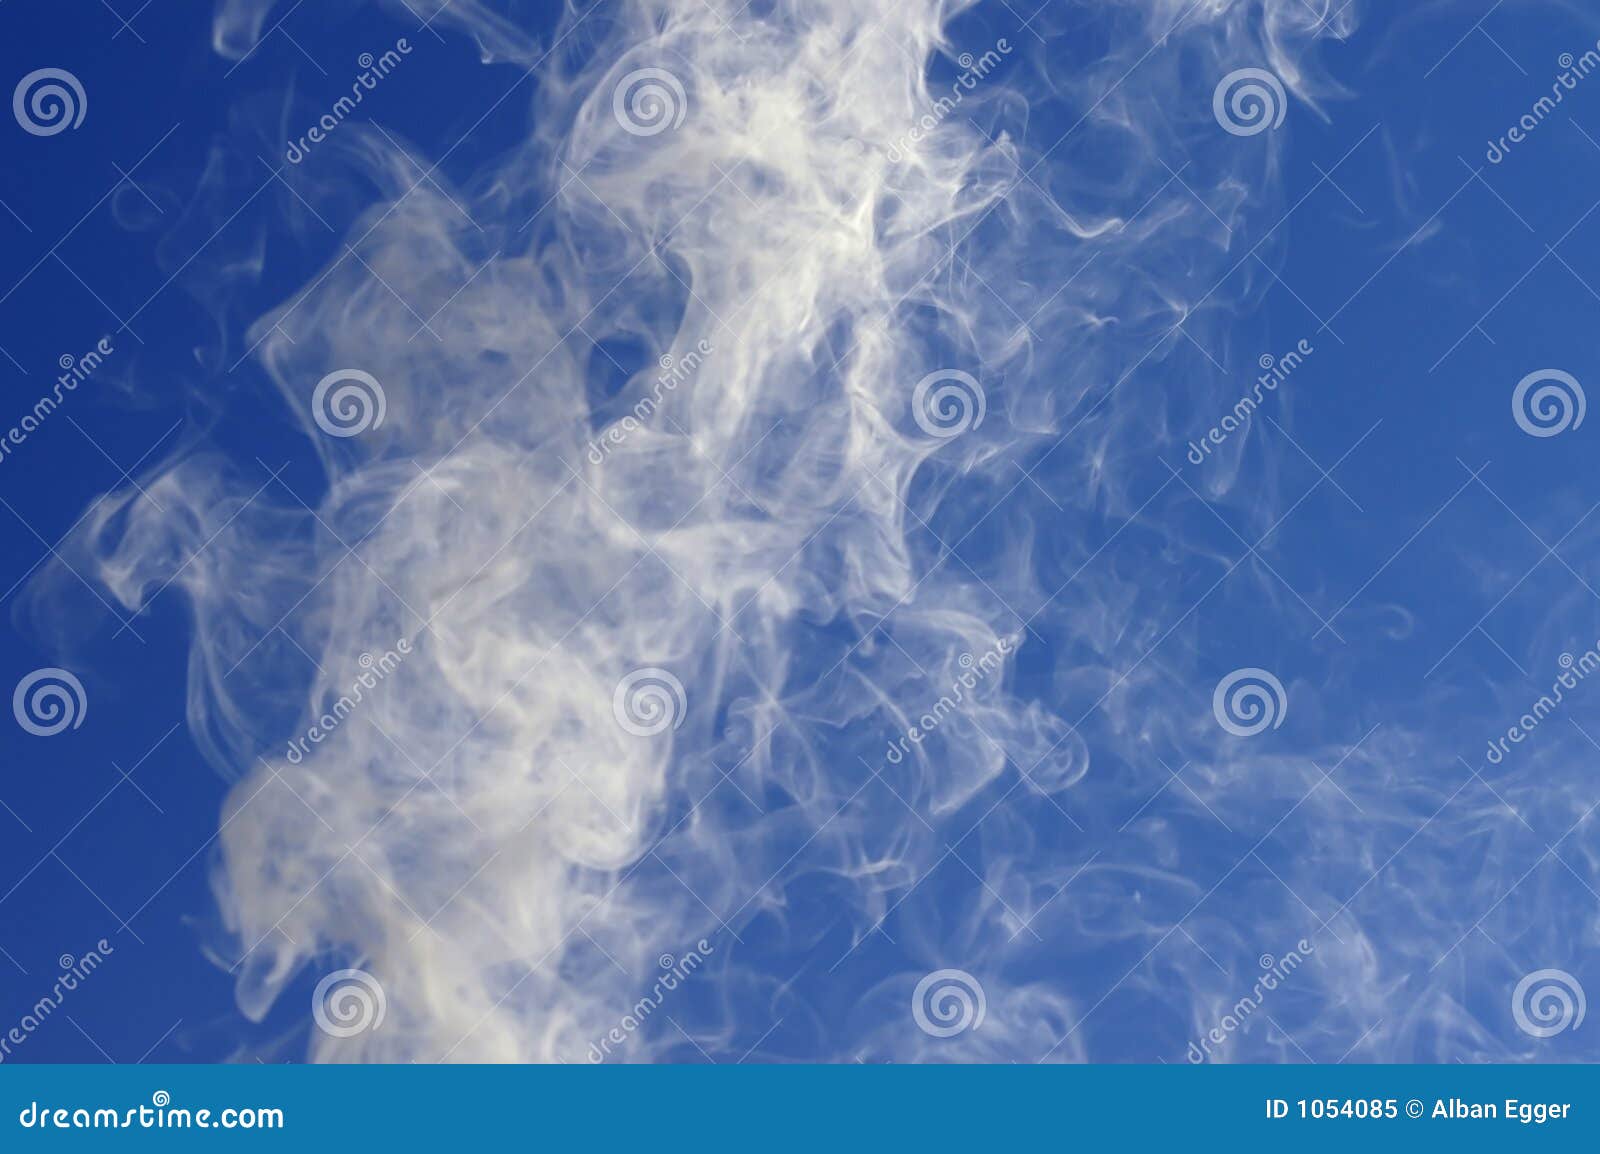 Smoke stock image. Image of environment, ozone, smog, heat - 1054085